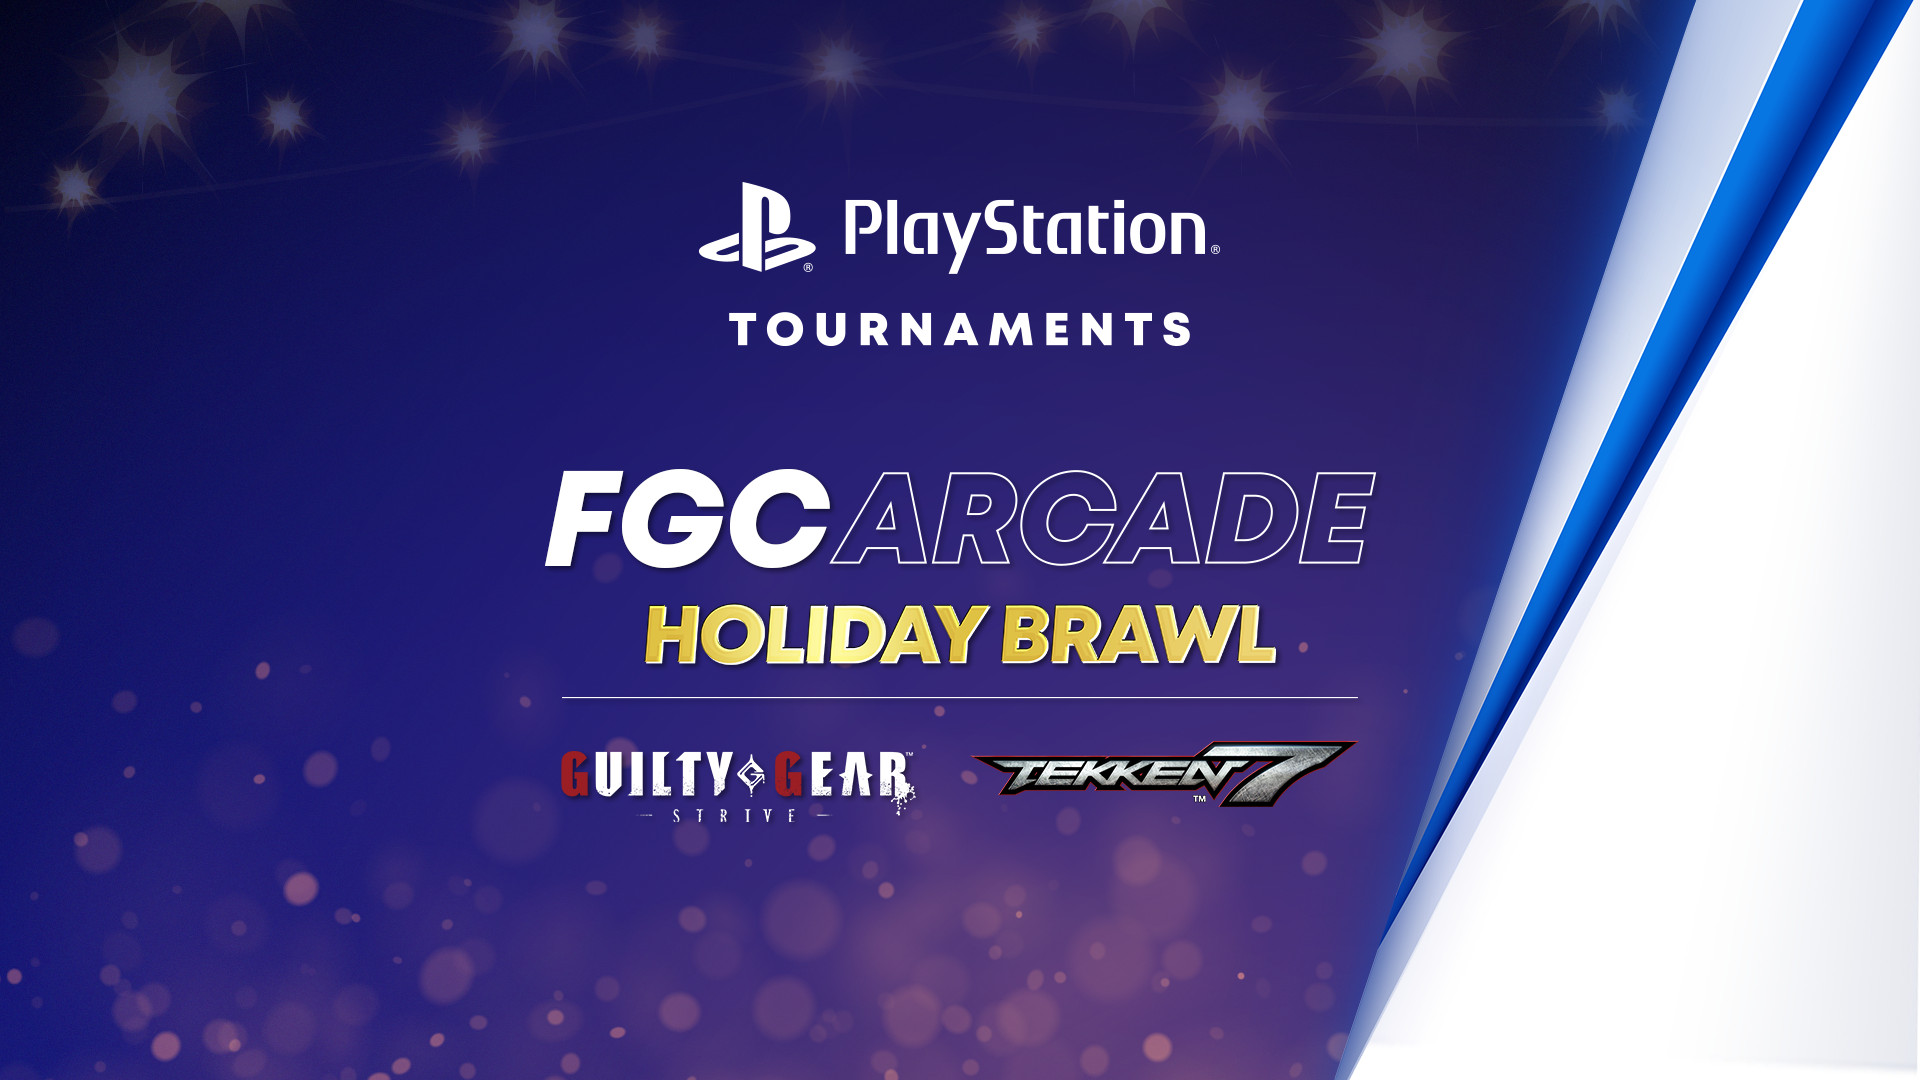 PlayStation Tournaments, FGC Arcade Holiday Brawl